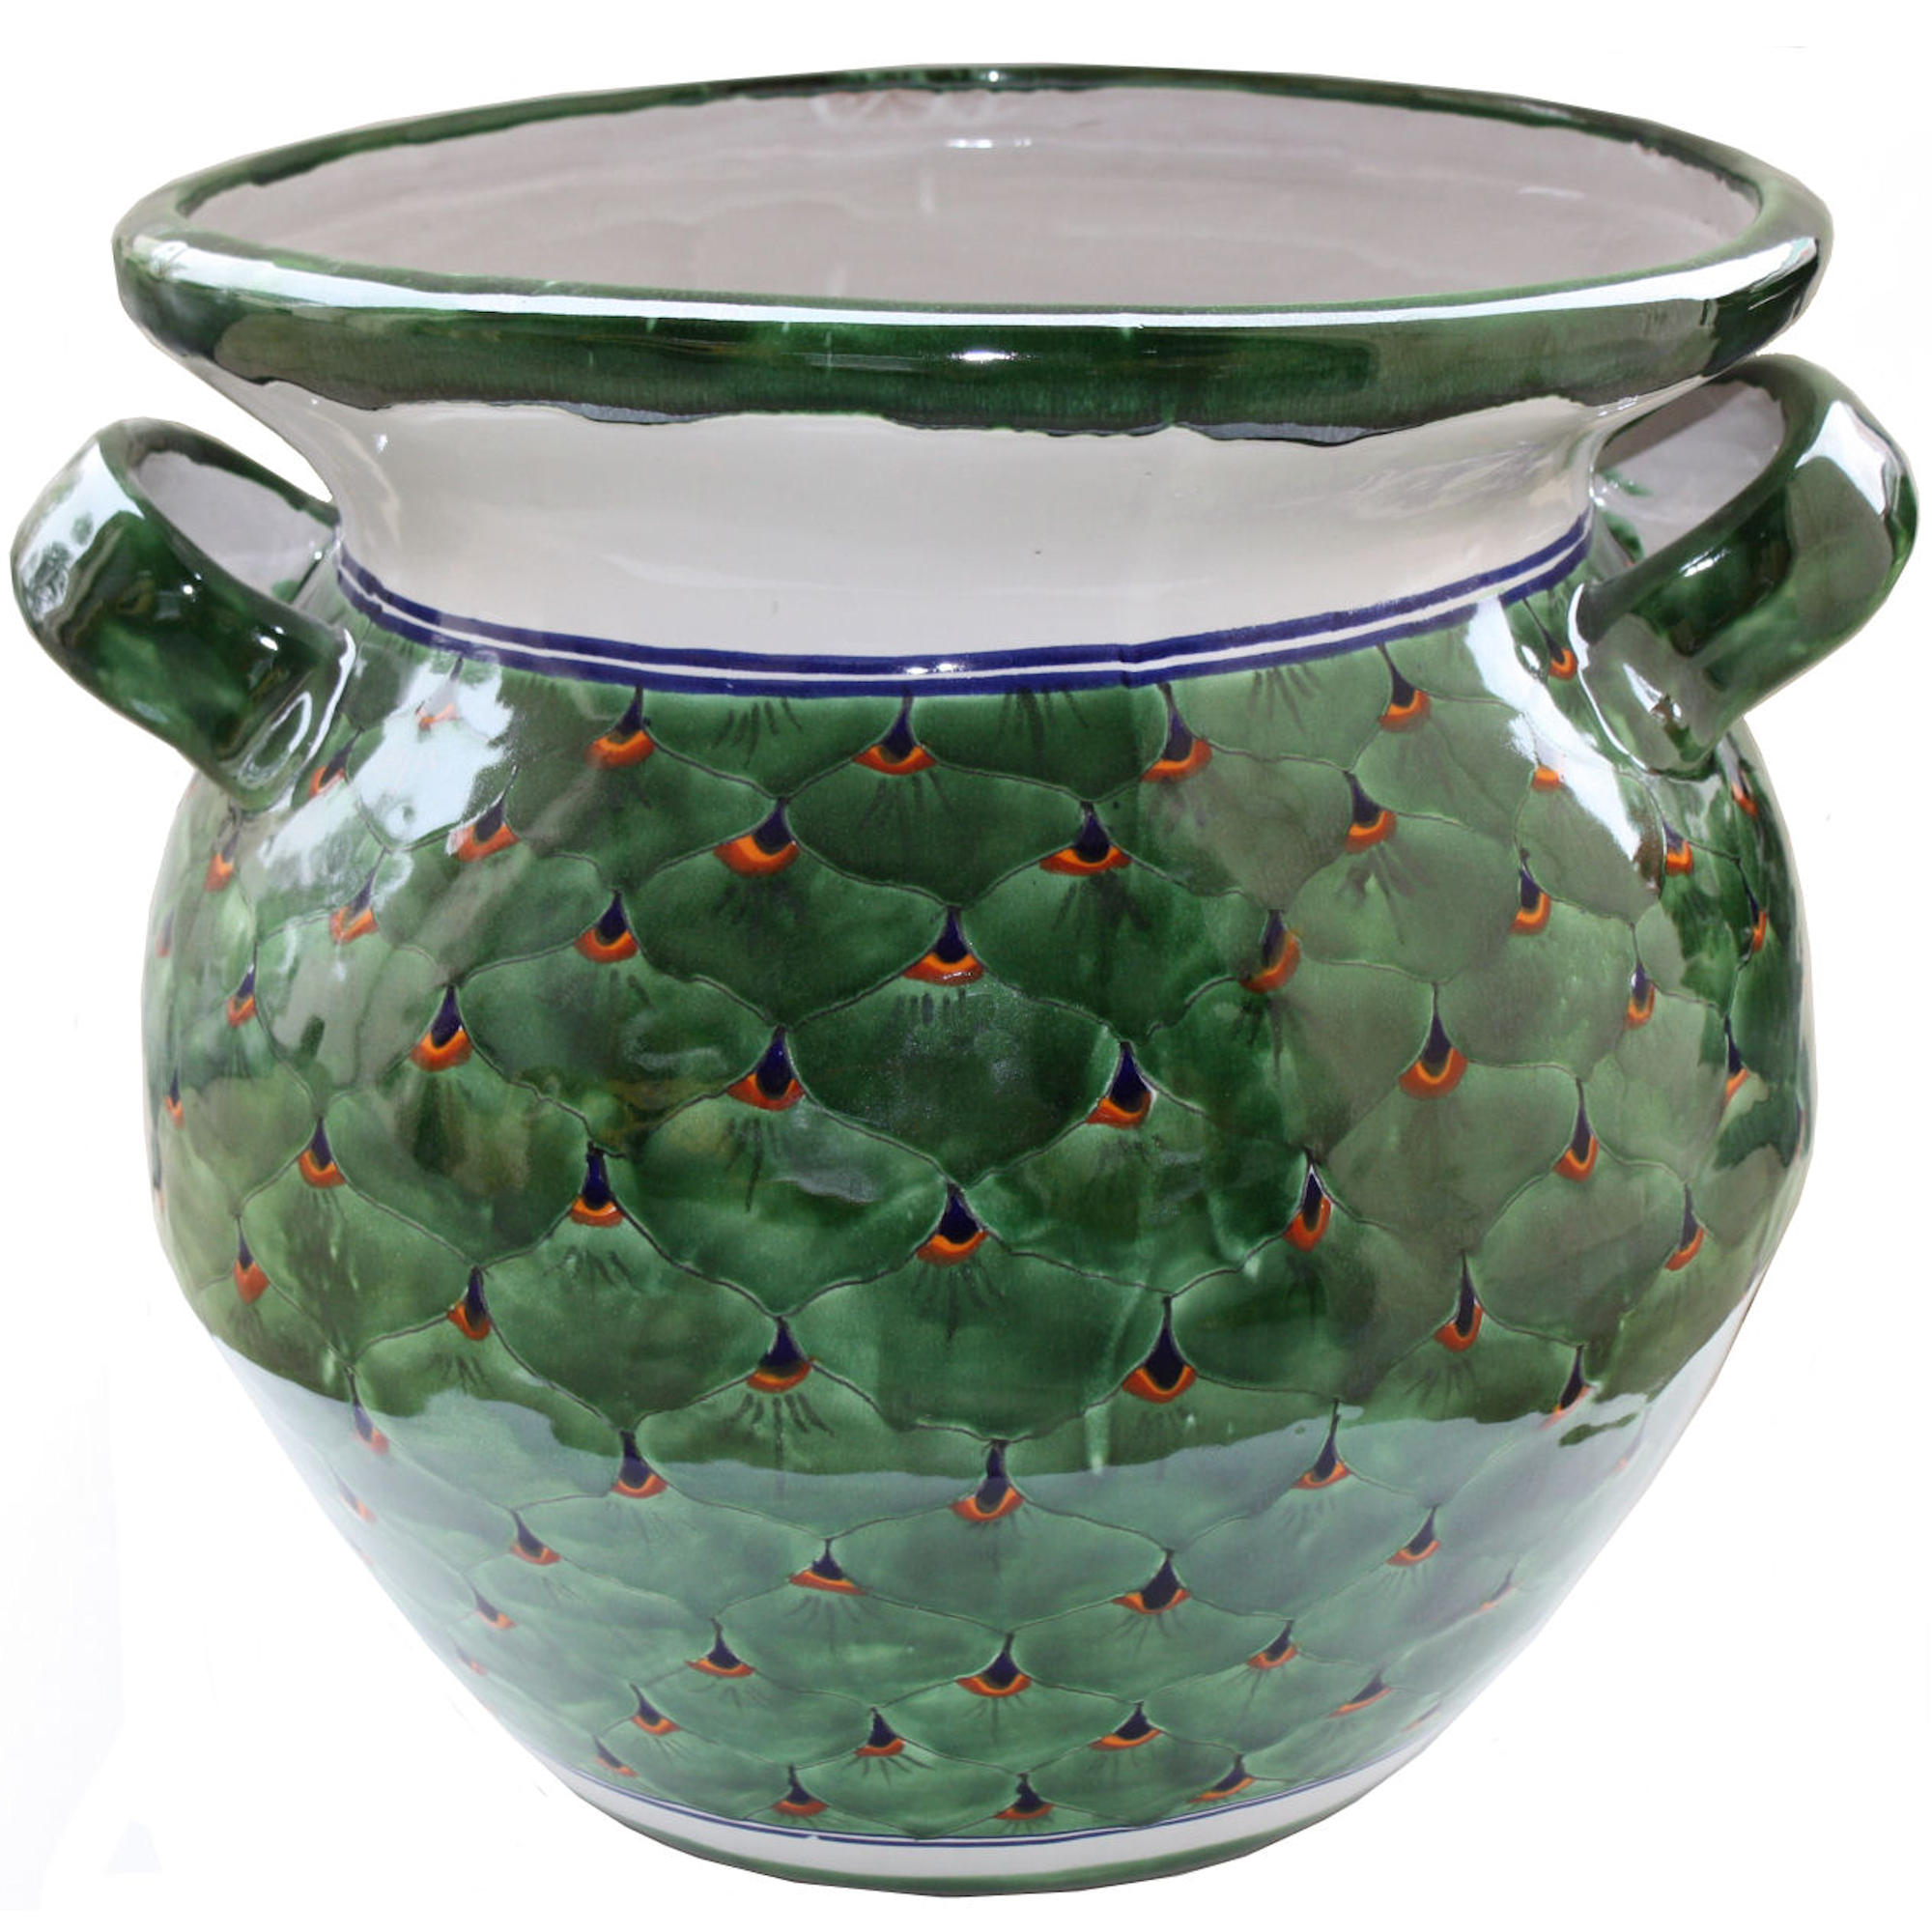 TalaMex Jumbo-Sized Peacock Mexican Colors Talavera Ceramic Garden Pot